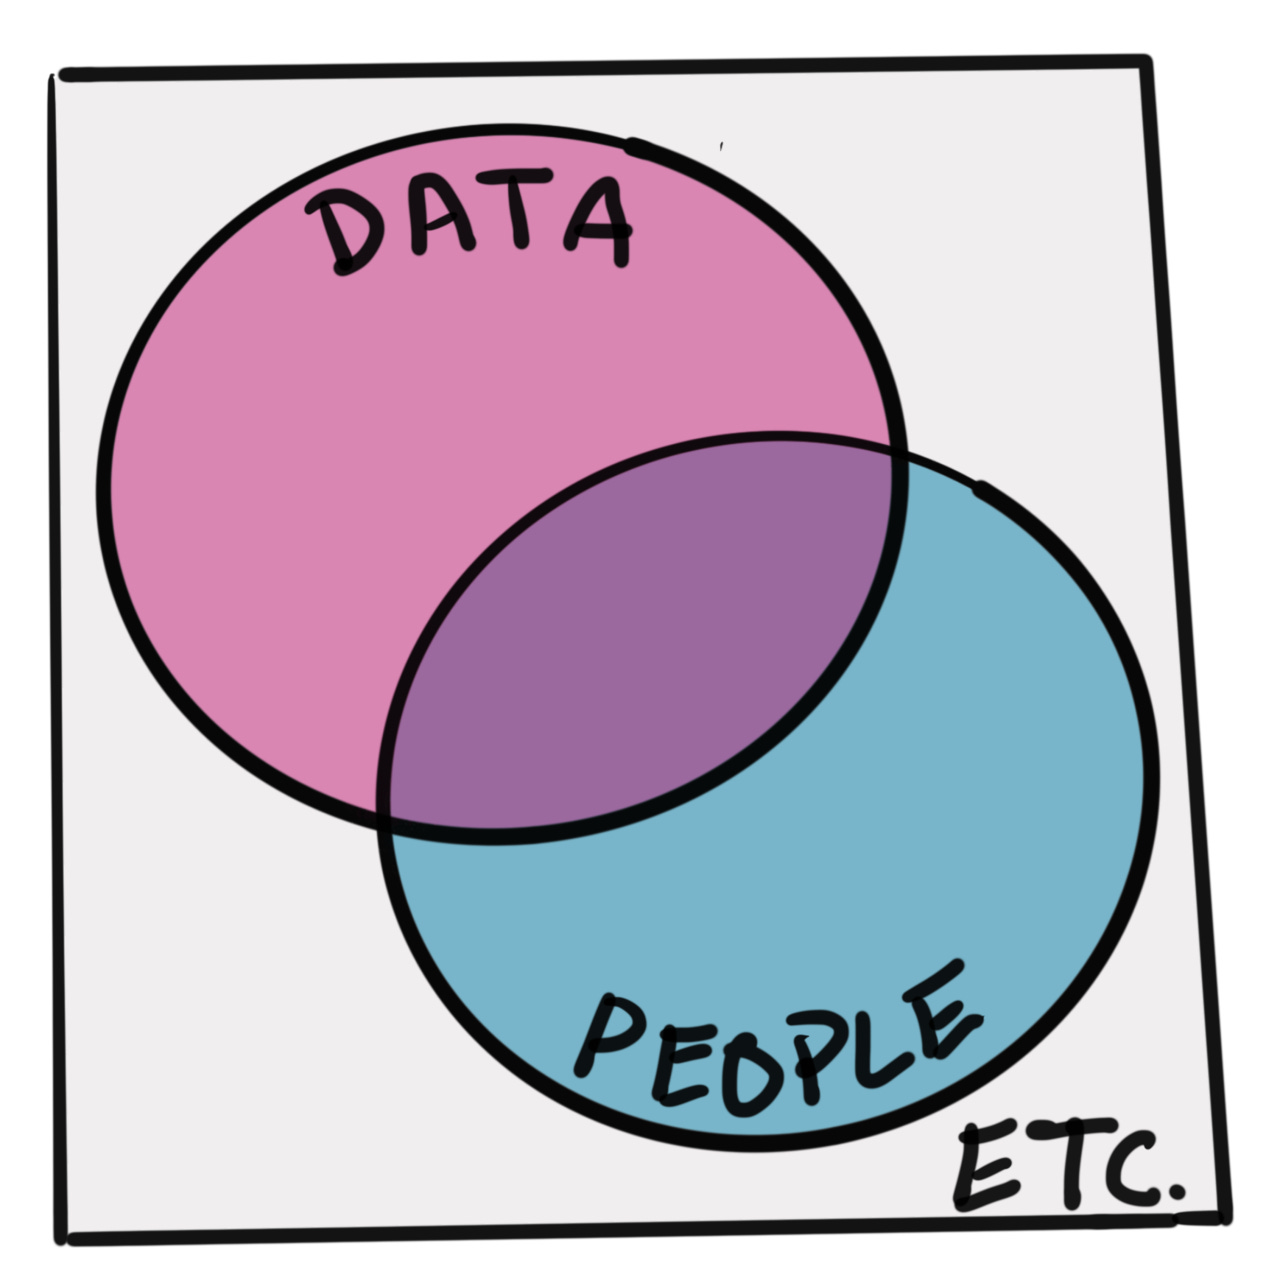 Artwork for Data People Etc.